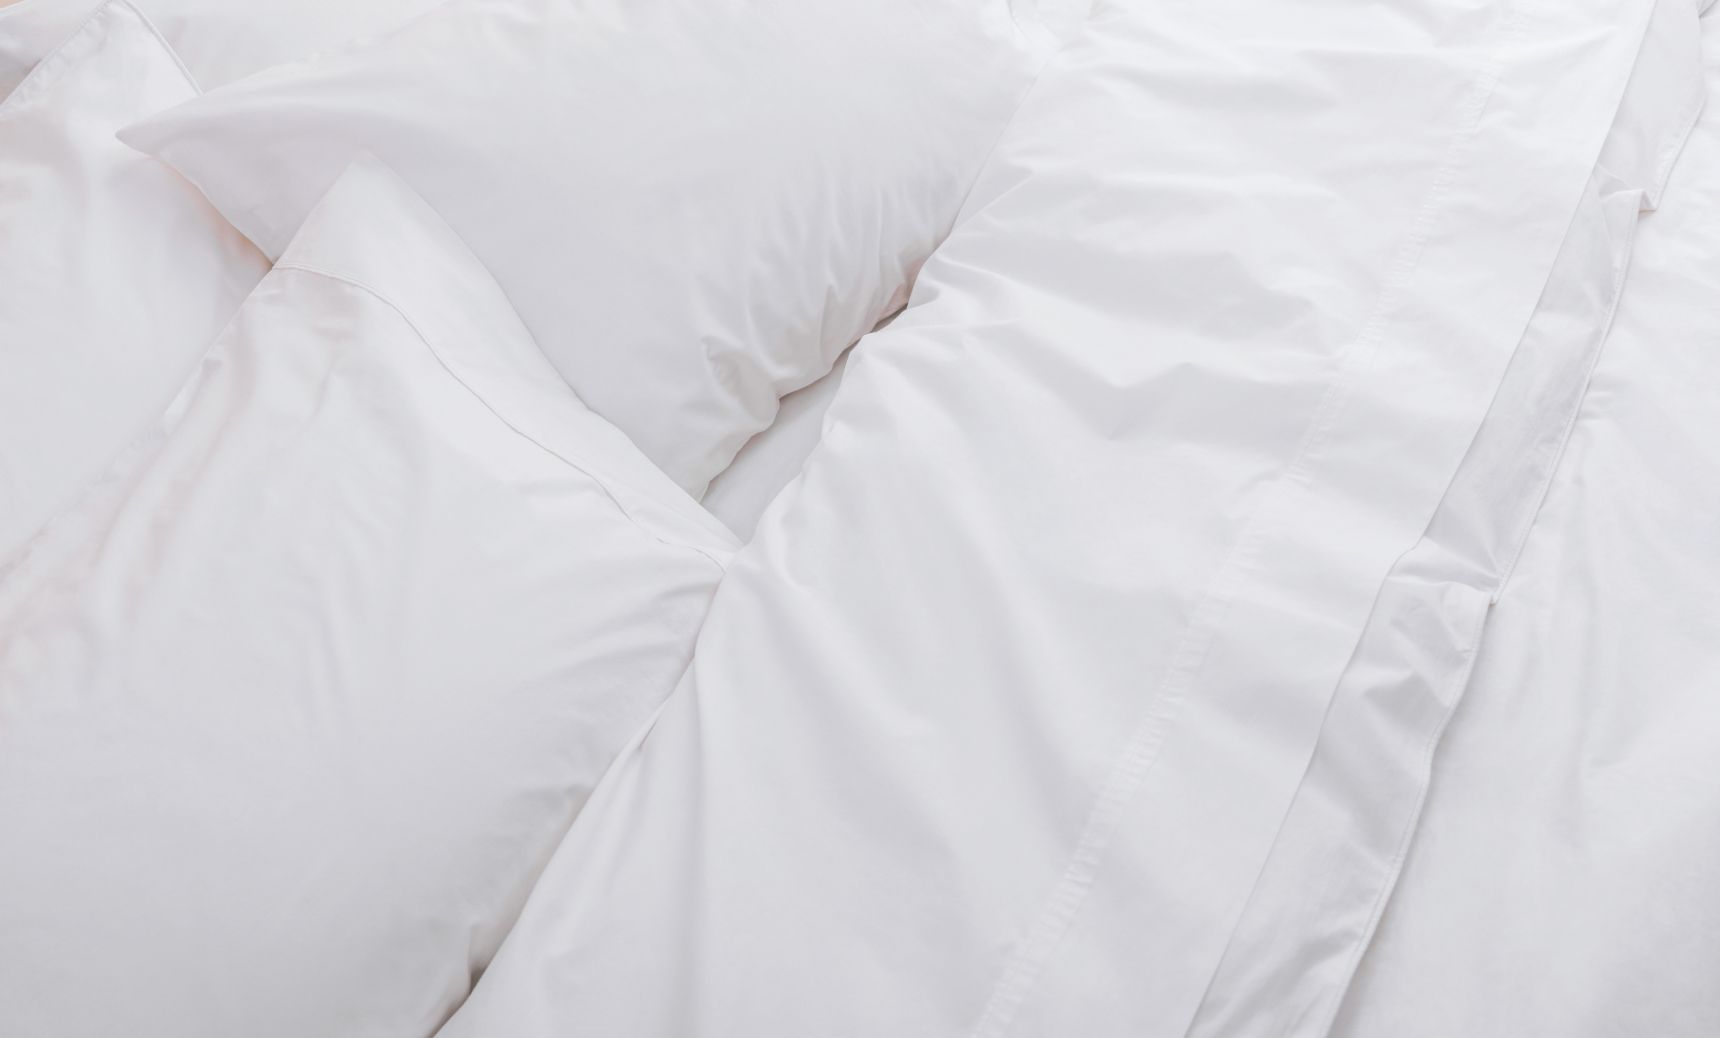 Endy Organic Cotton Pillowcase Cover (Sateen) in Alpine White colourway.